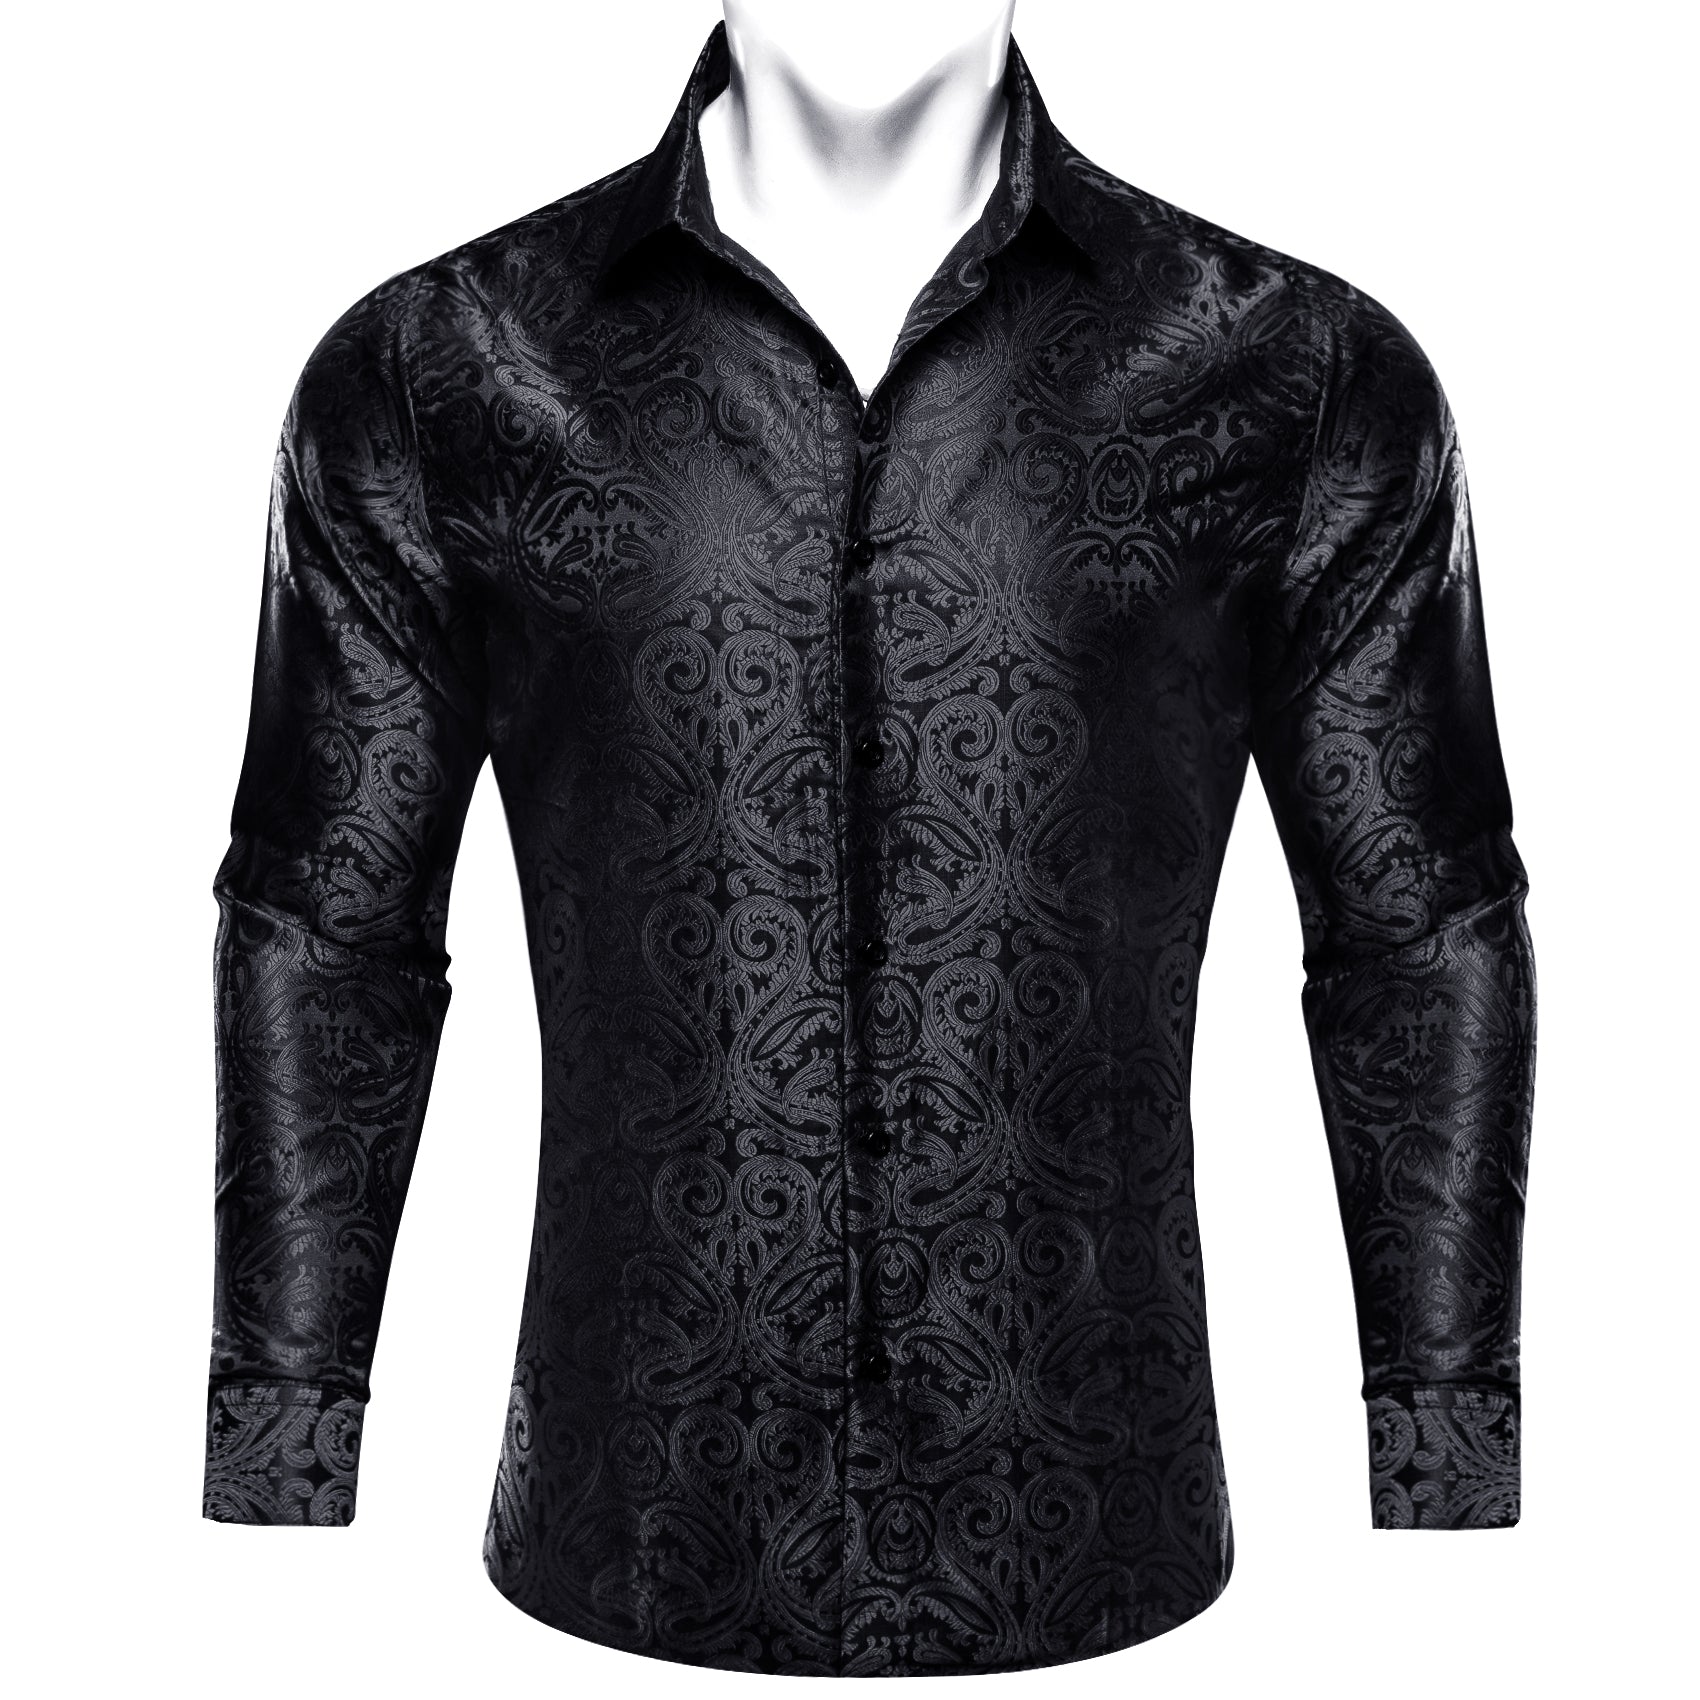 Barry Wang Black Shirt Silk Men's Retro Paisley Western Shirts Casual